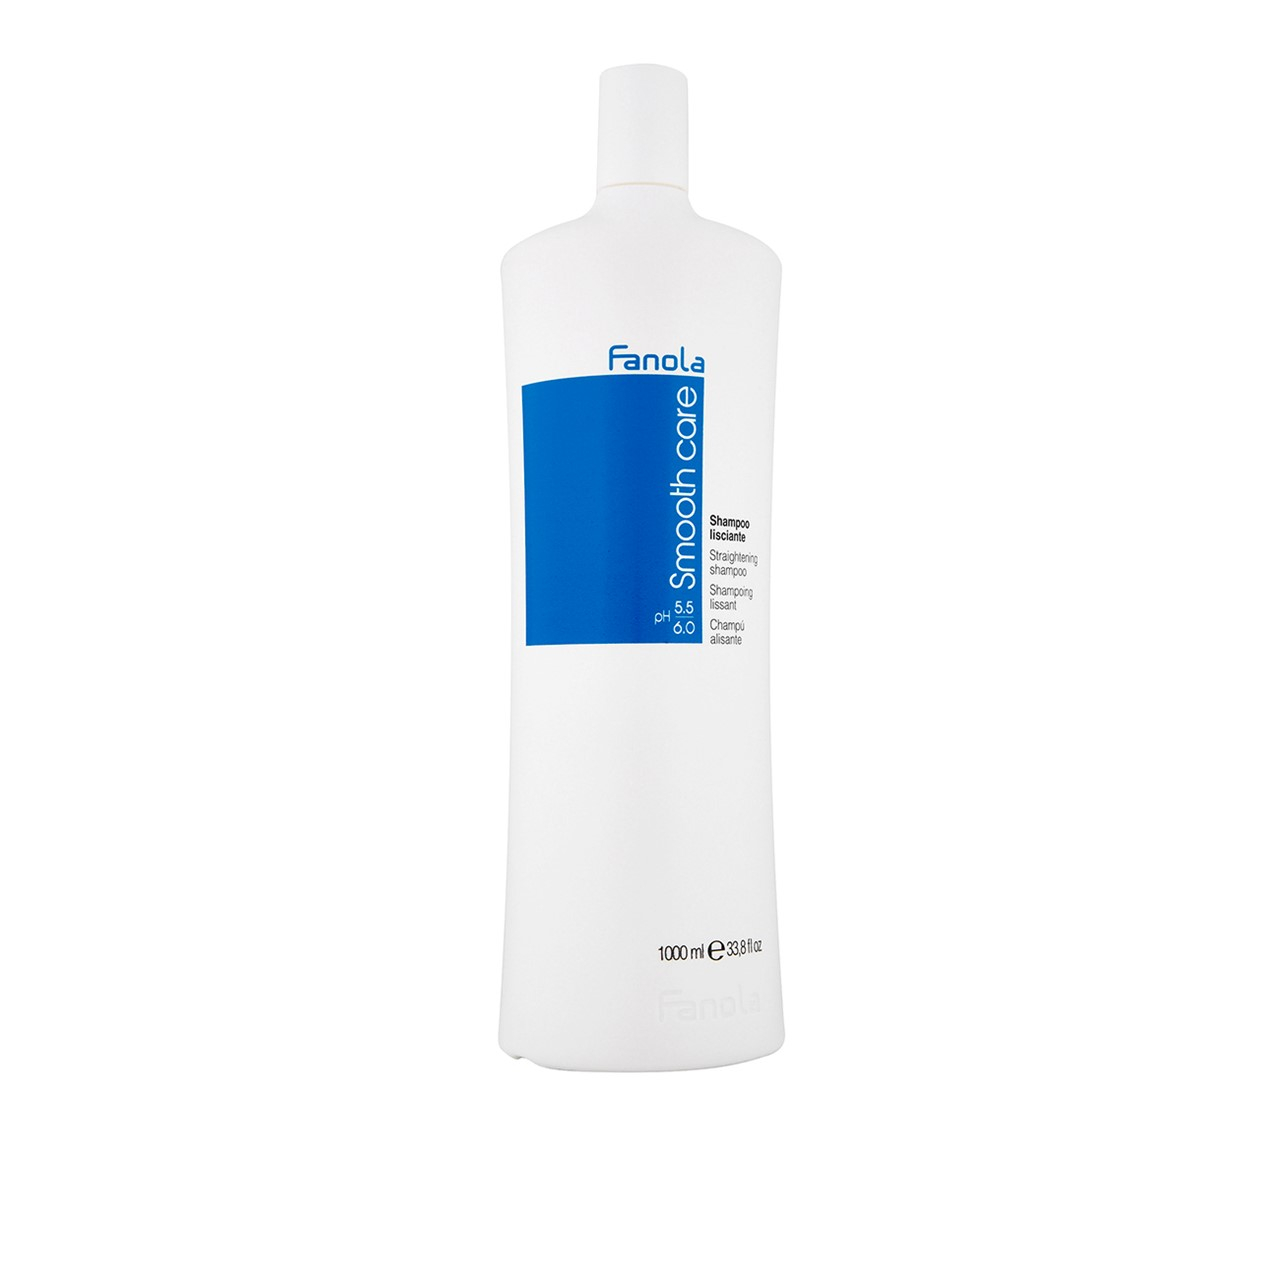 Fanola Smooth Care Straightening Shampoo 1L (33.8 fl oz)